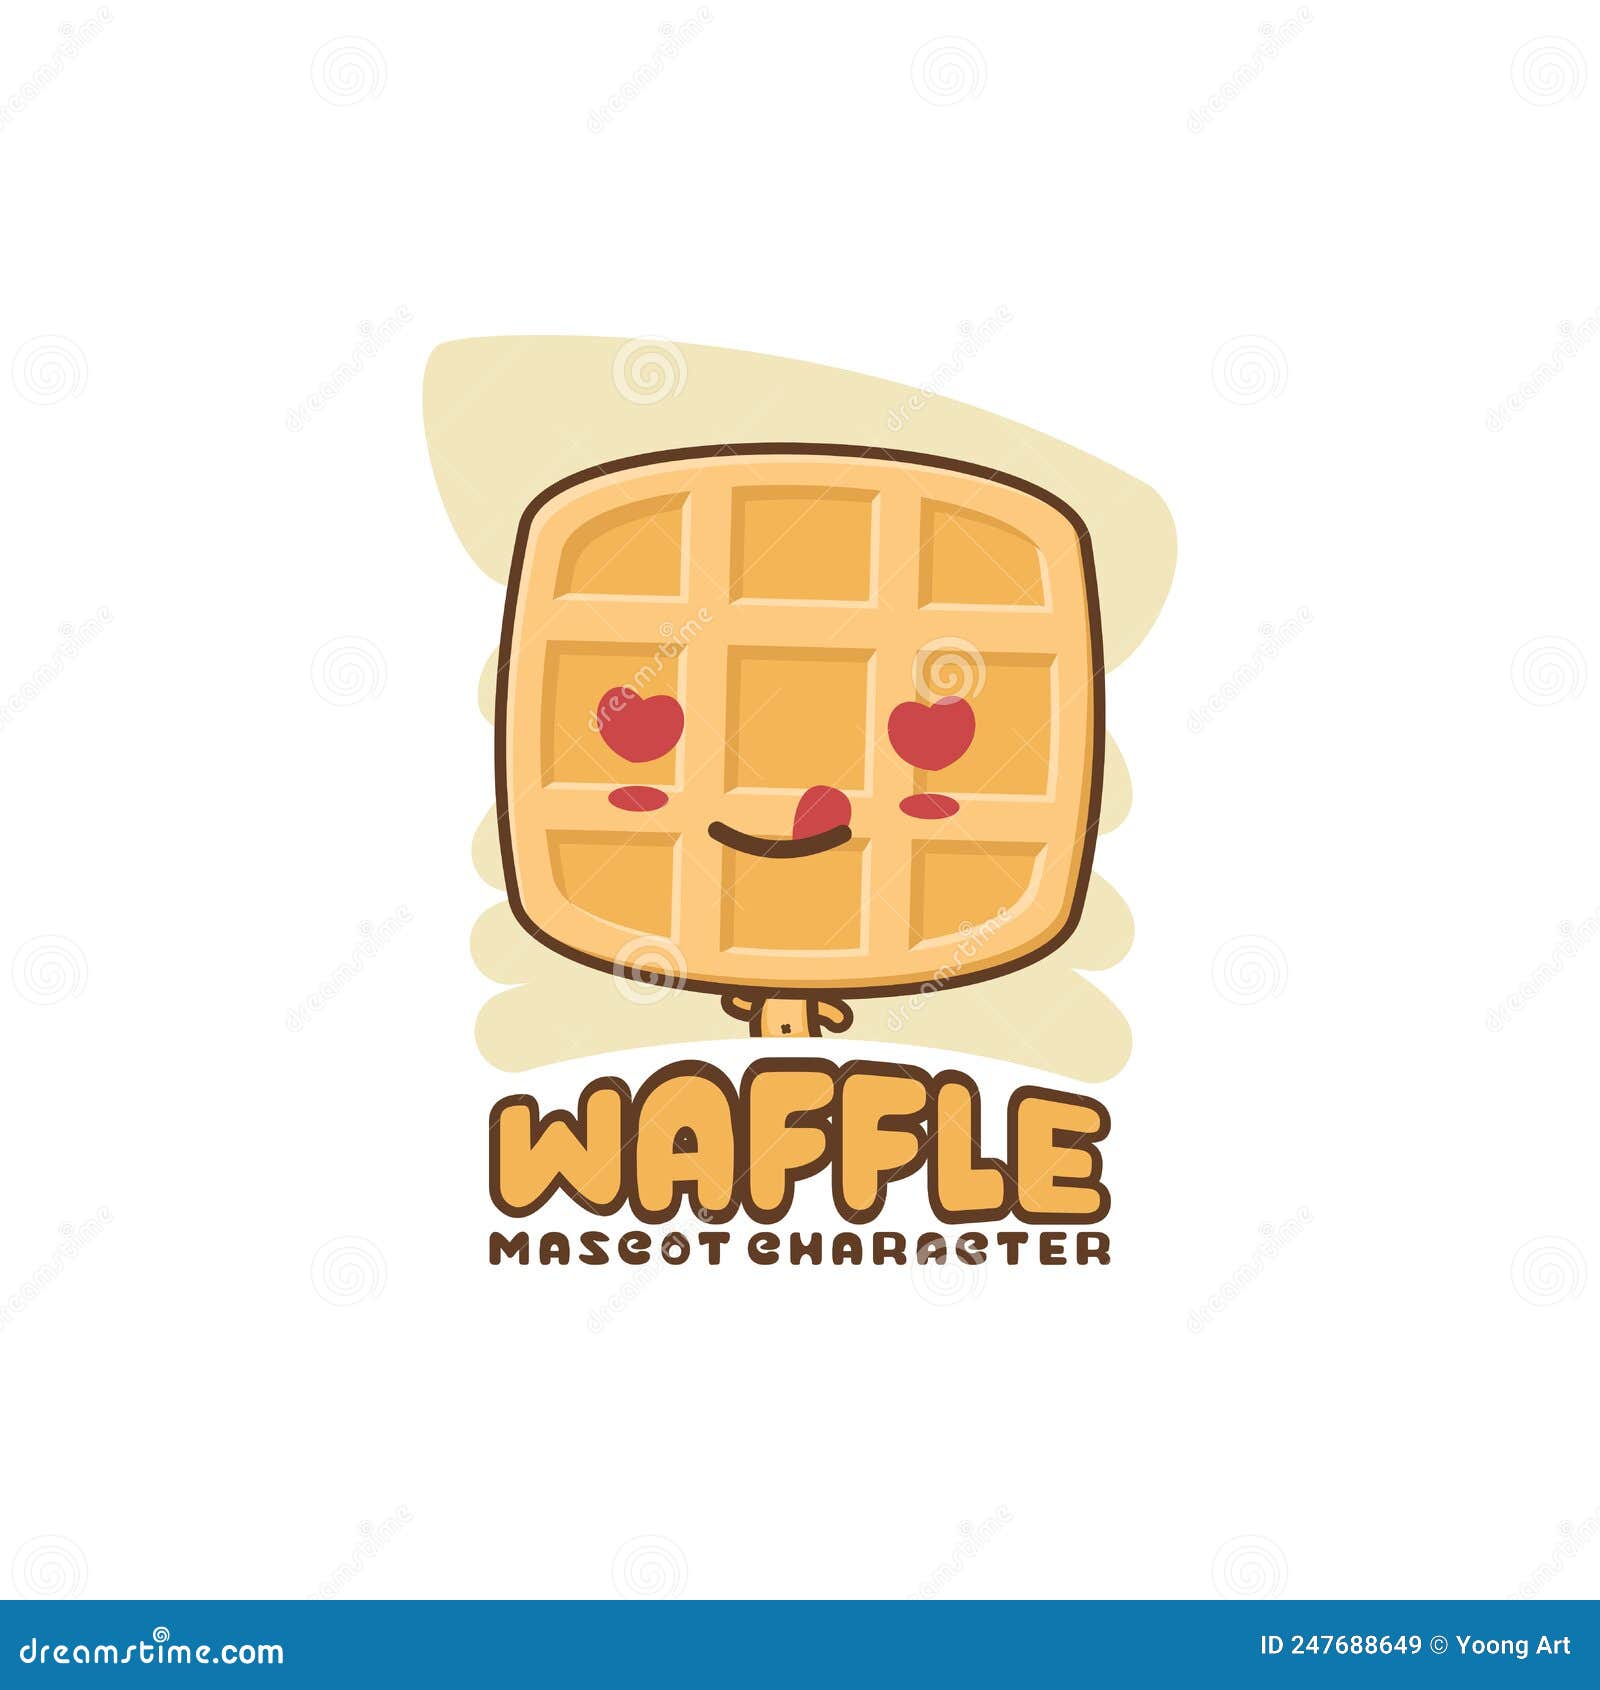 Waffle - Mascot Logo, Graphic Templates - Envato Elements